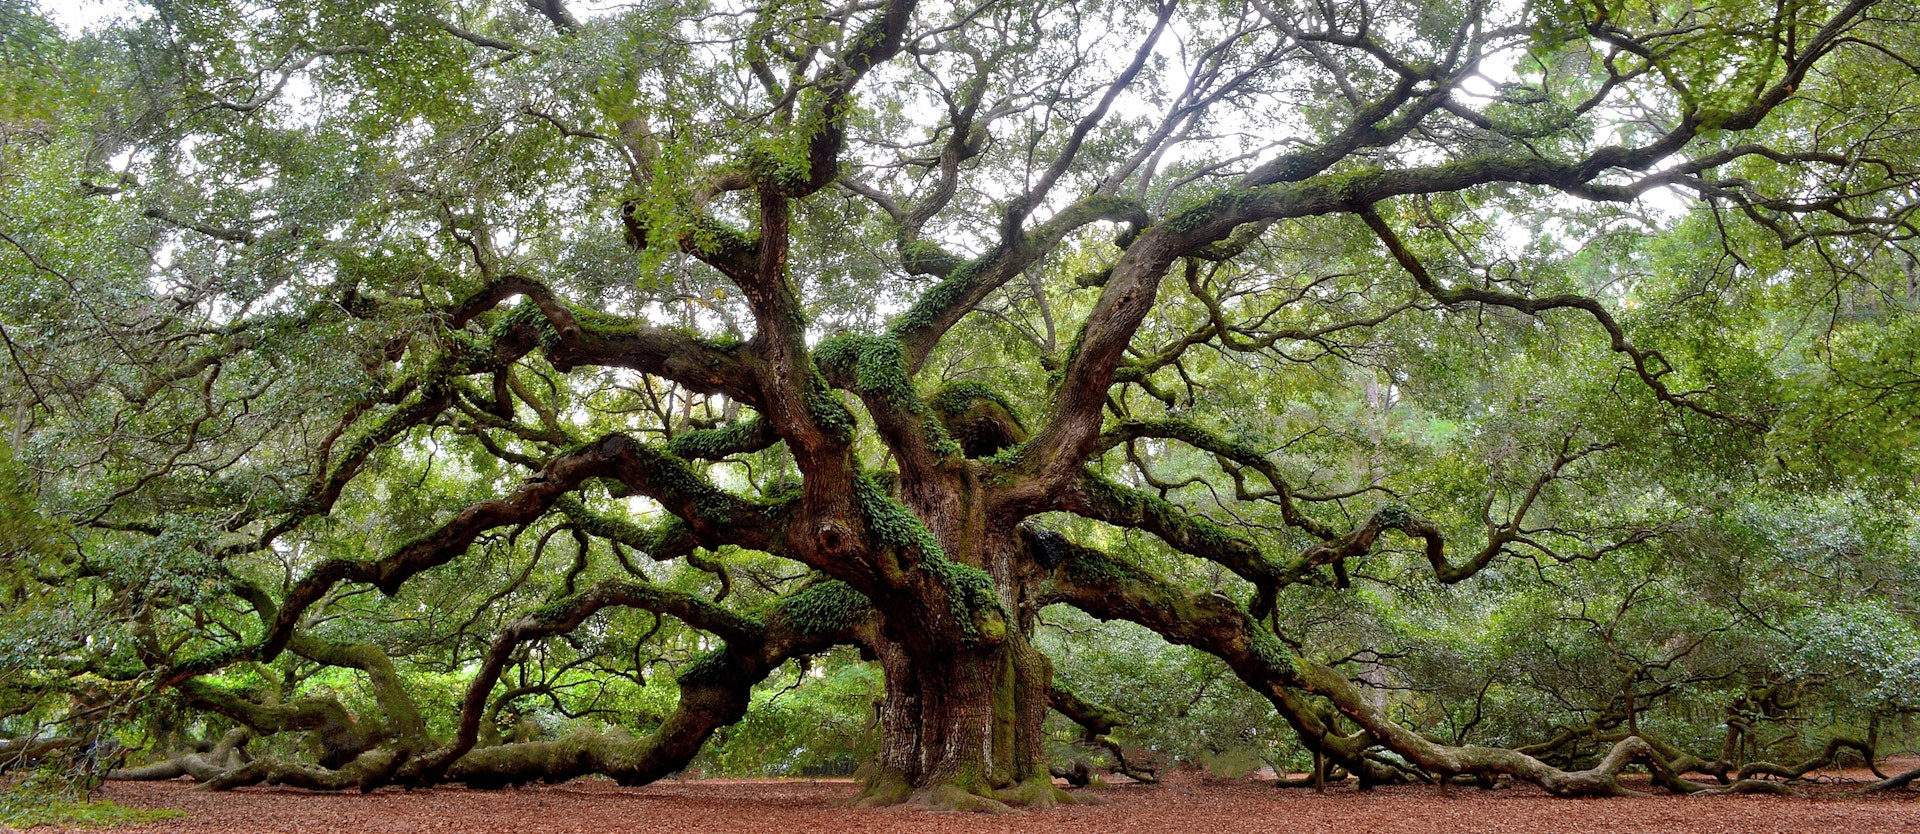 Angel Oak tree na Ilha St. Johns perto de Charleston, SC